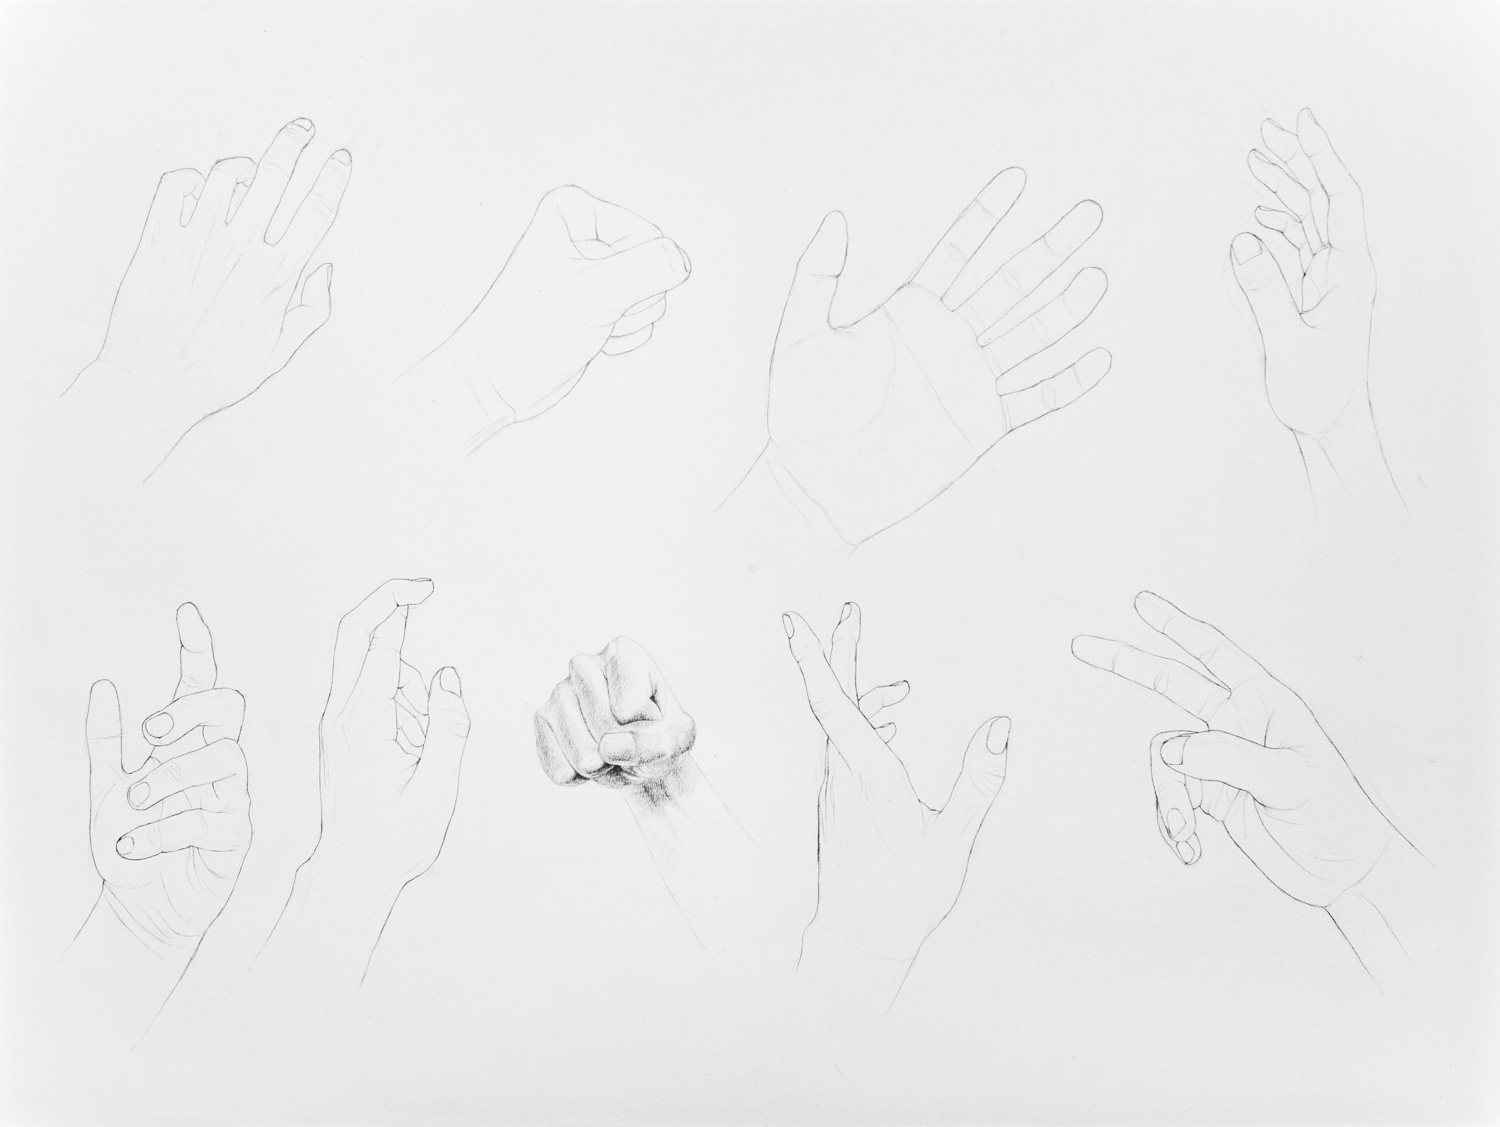 Hand studies in graphite.